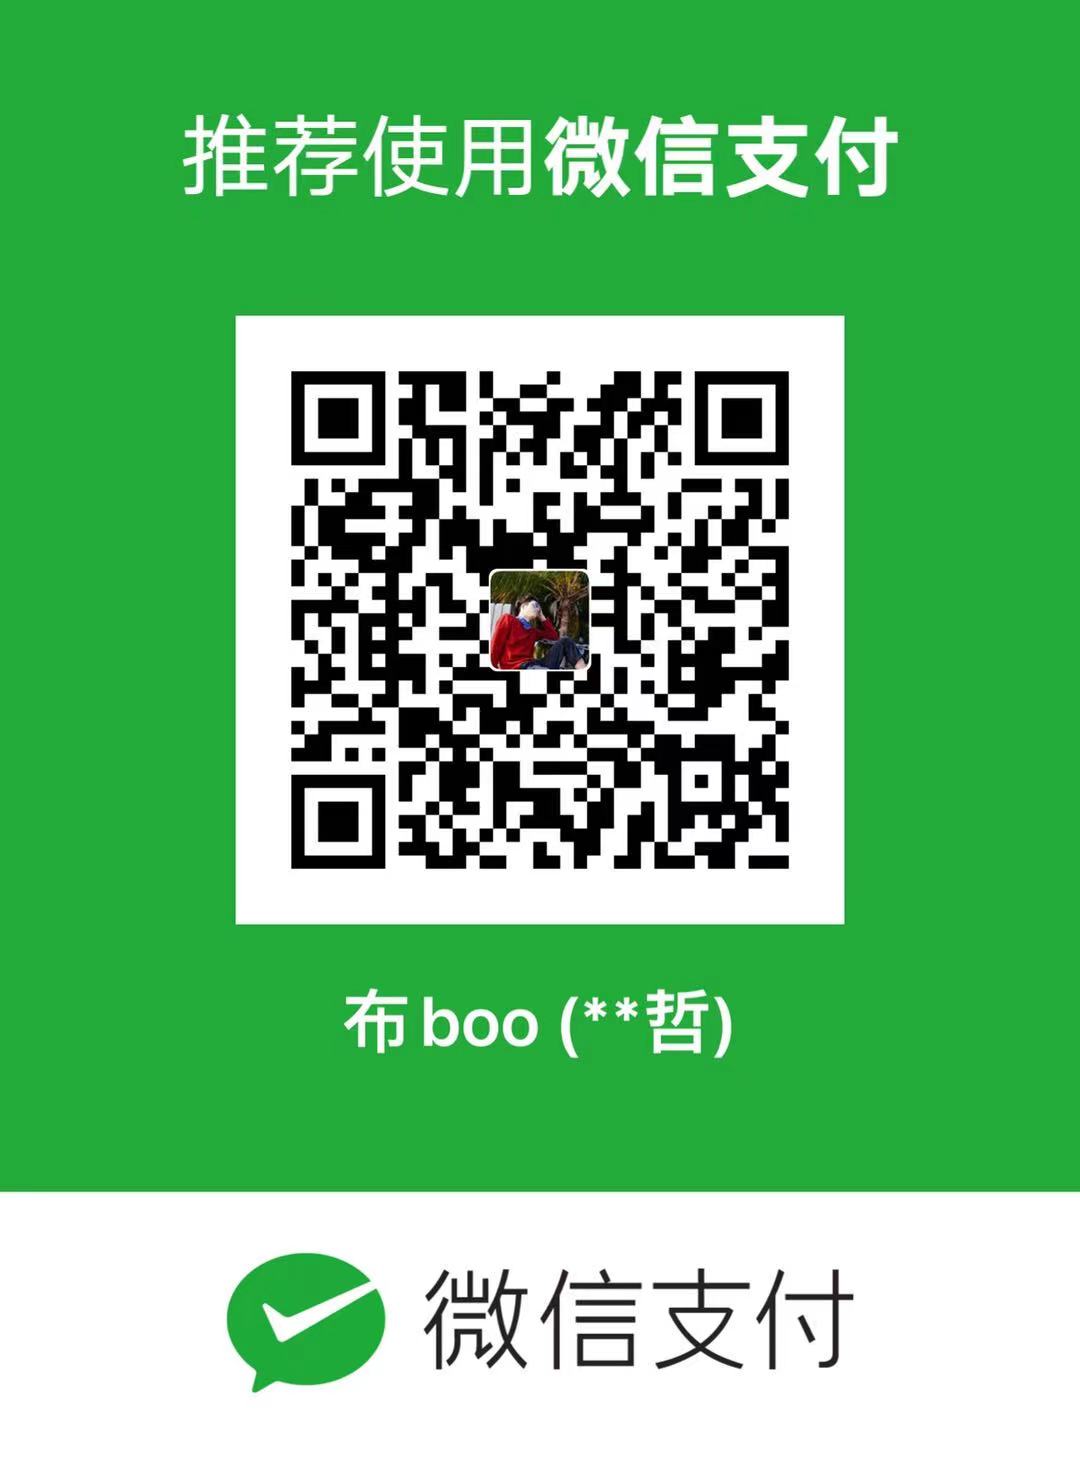 Bruski WeChat Pay